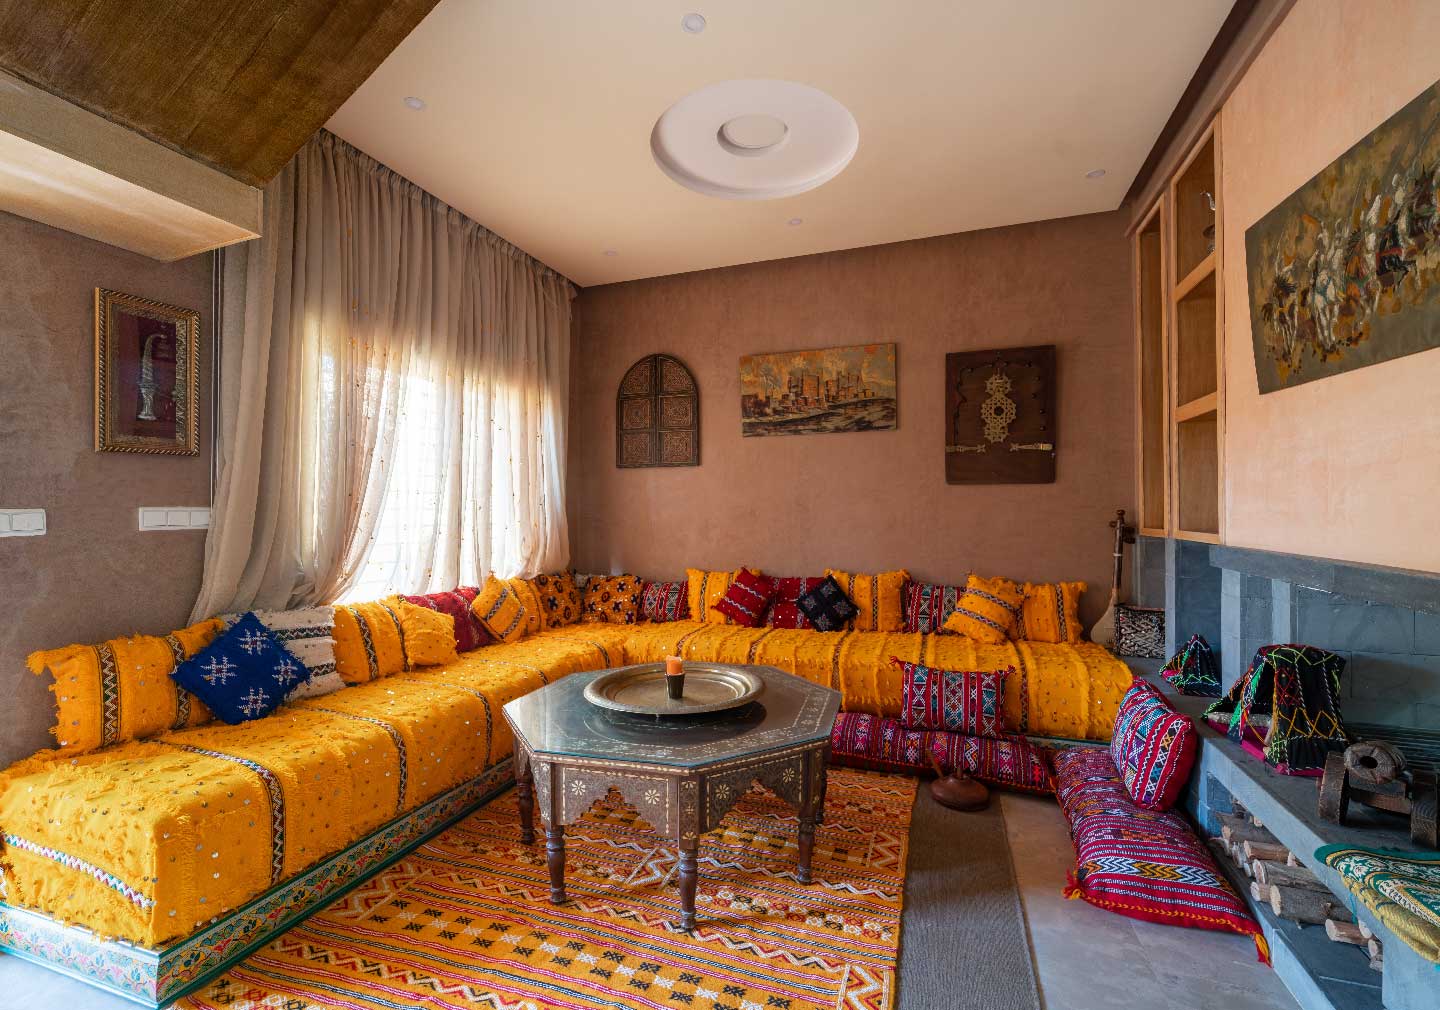 Kaleidoscope of Colours in Moroccan interior designs